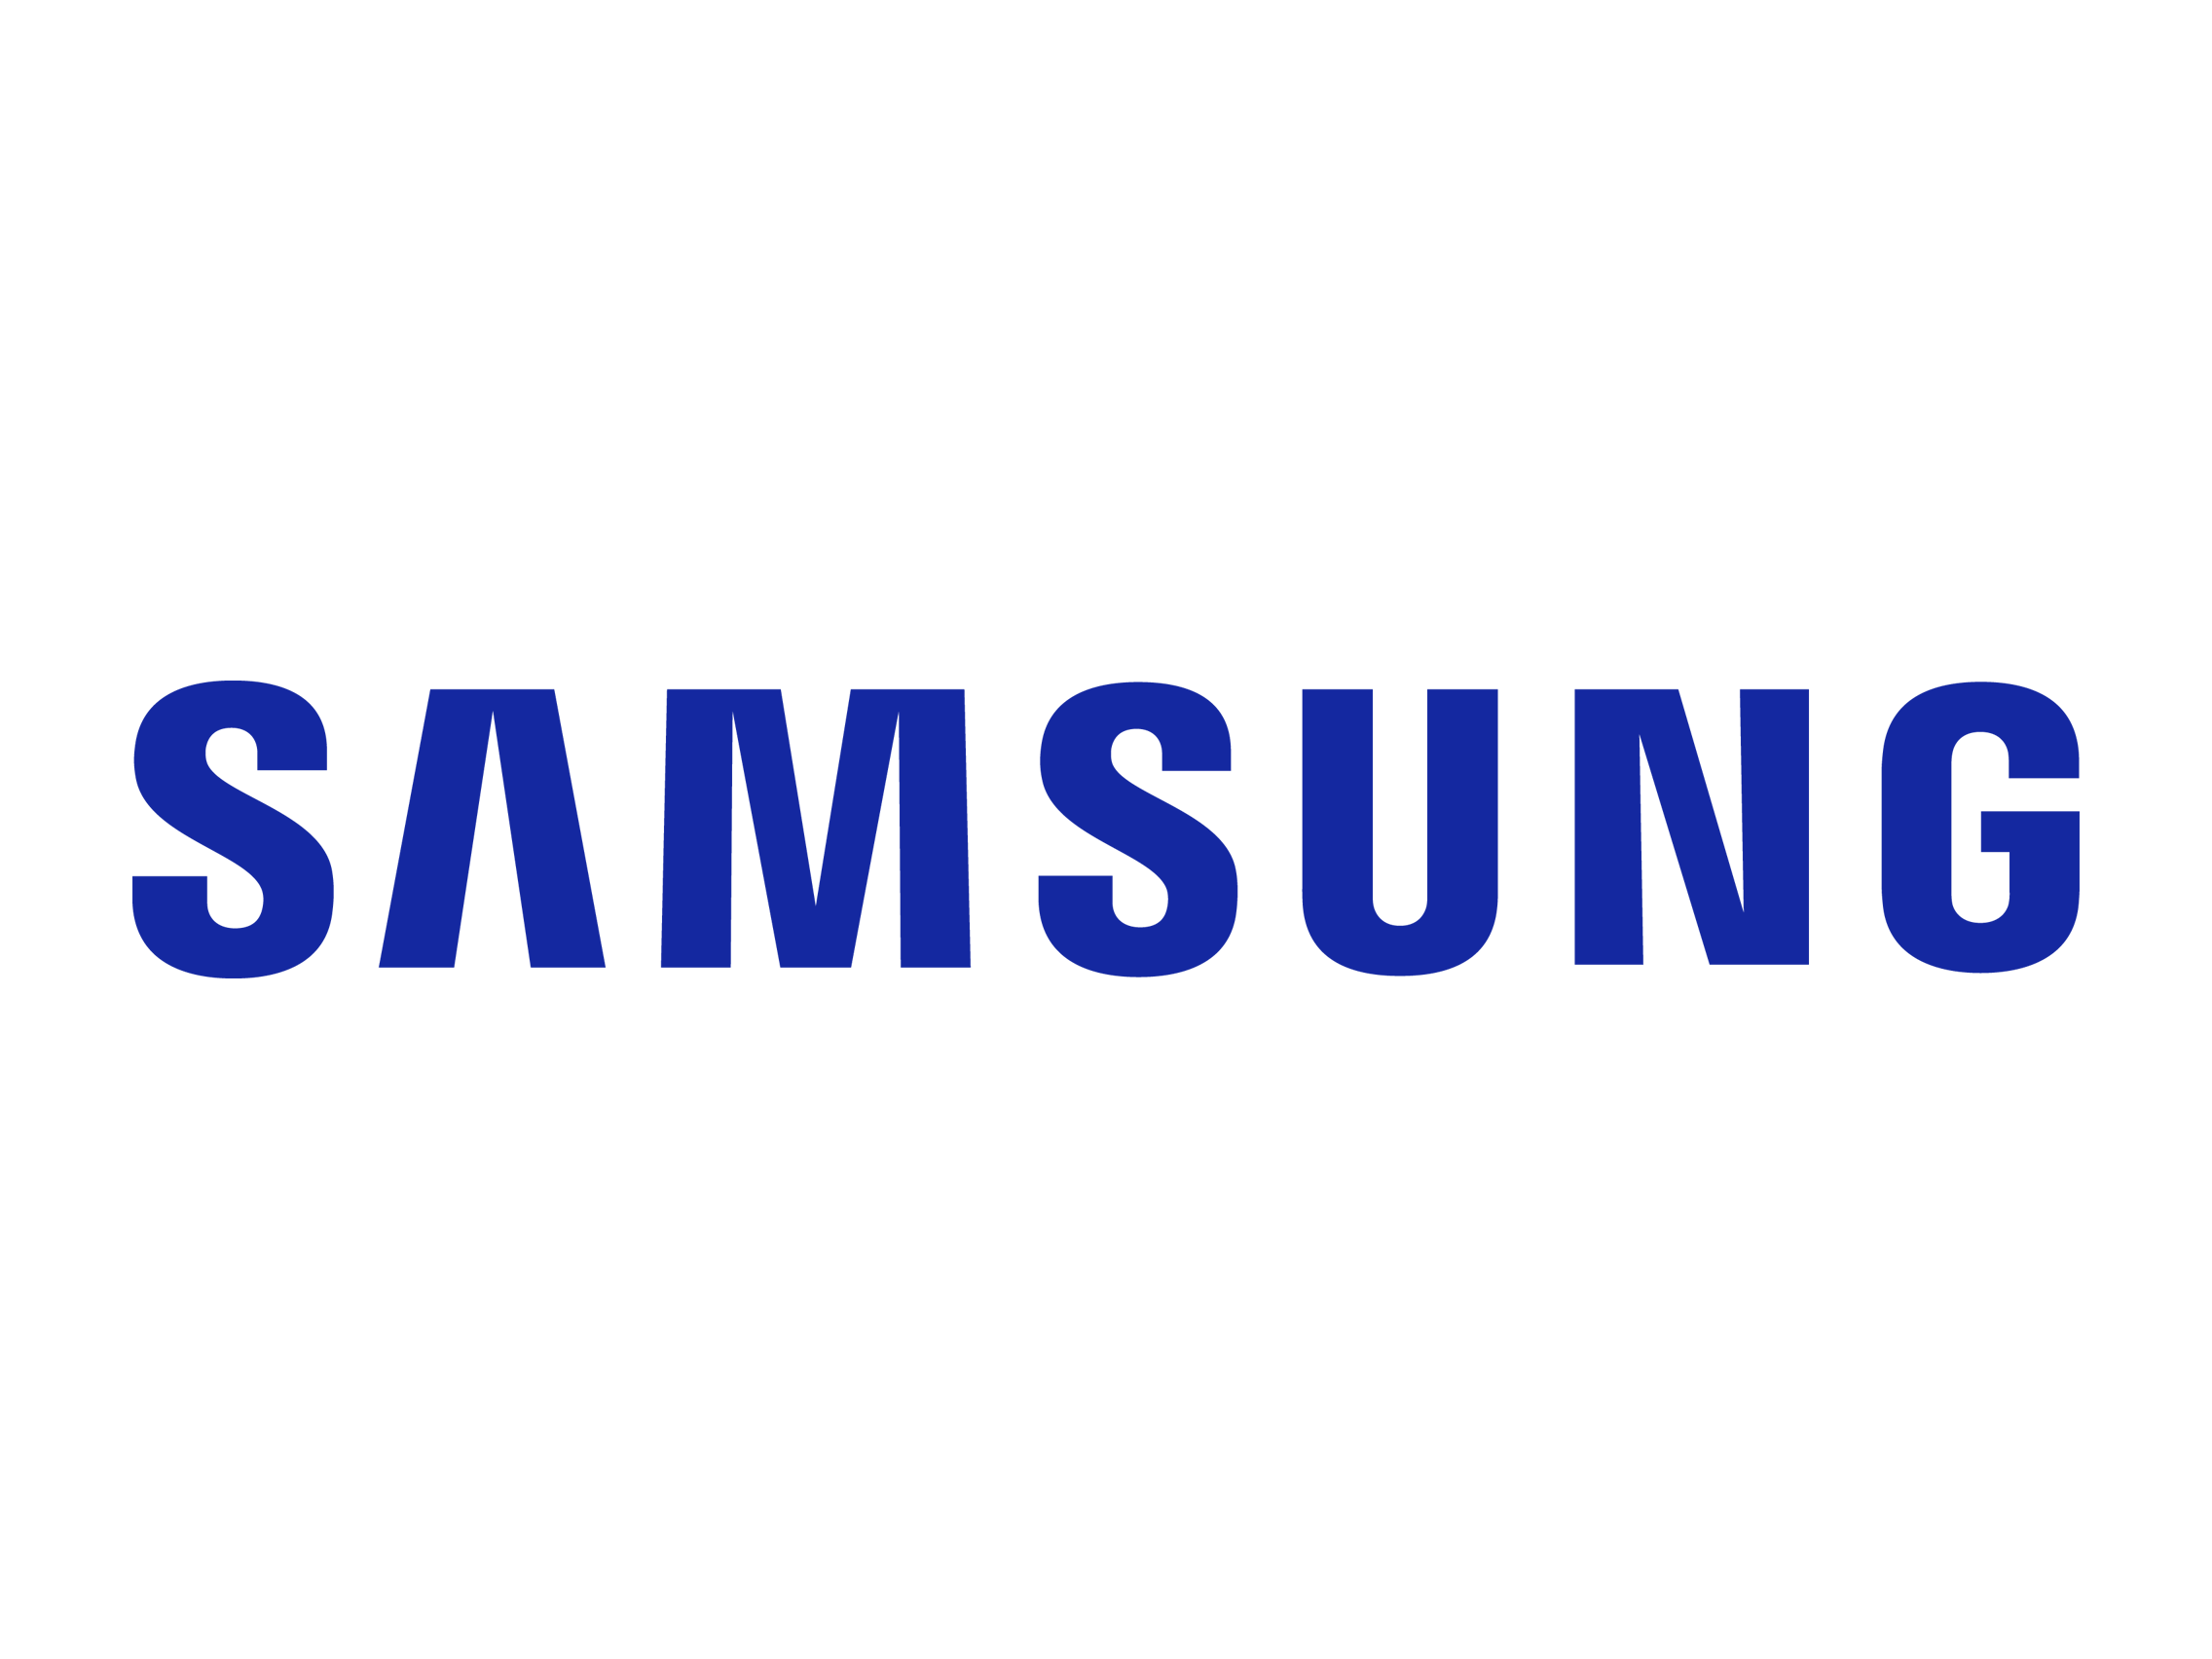 Блок проявки Samsung оригинал для Samsung SL-X7400/7500/7600, желтый (JC96-12517A)